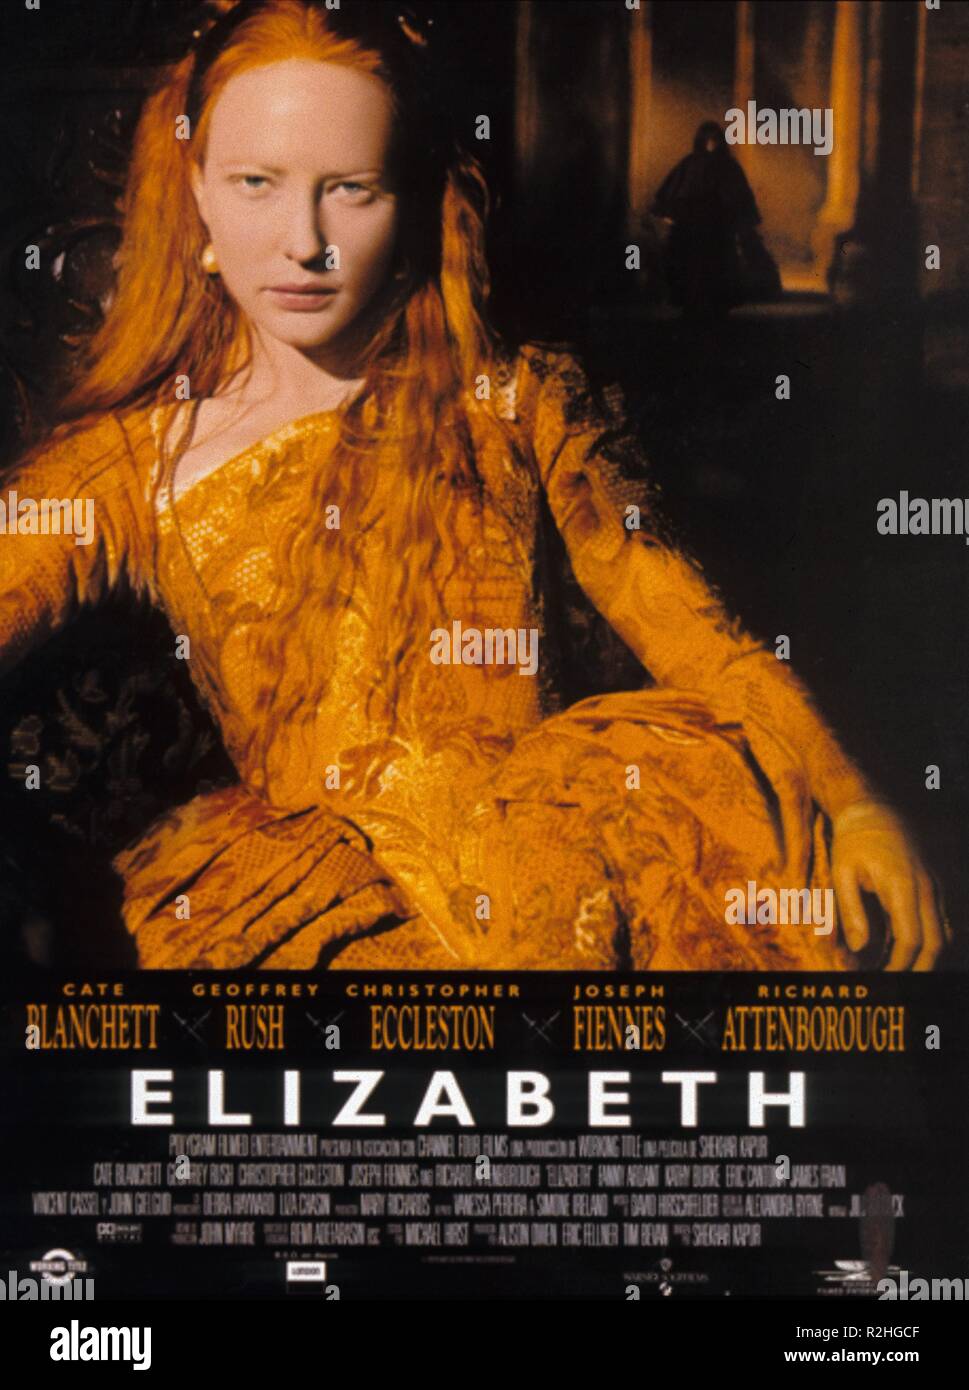 Elizabeth Harmon | Poster